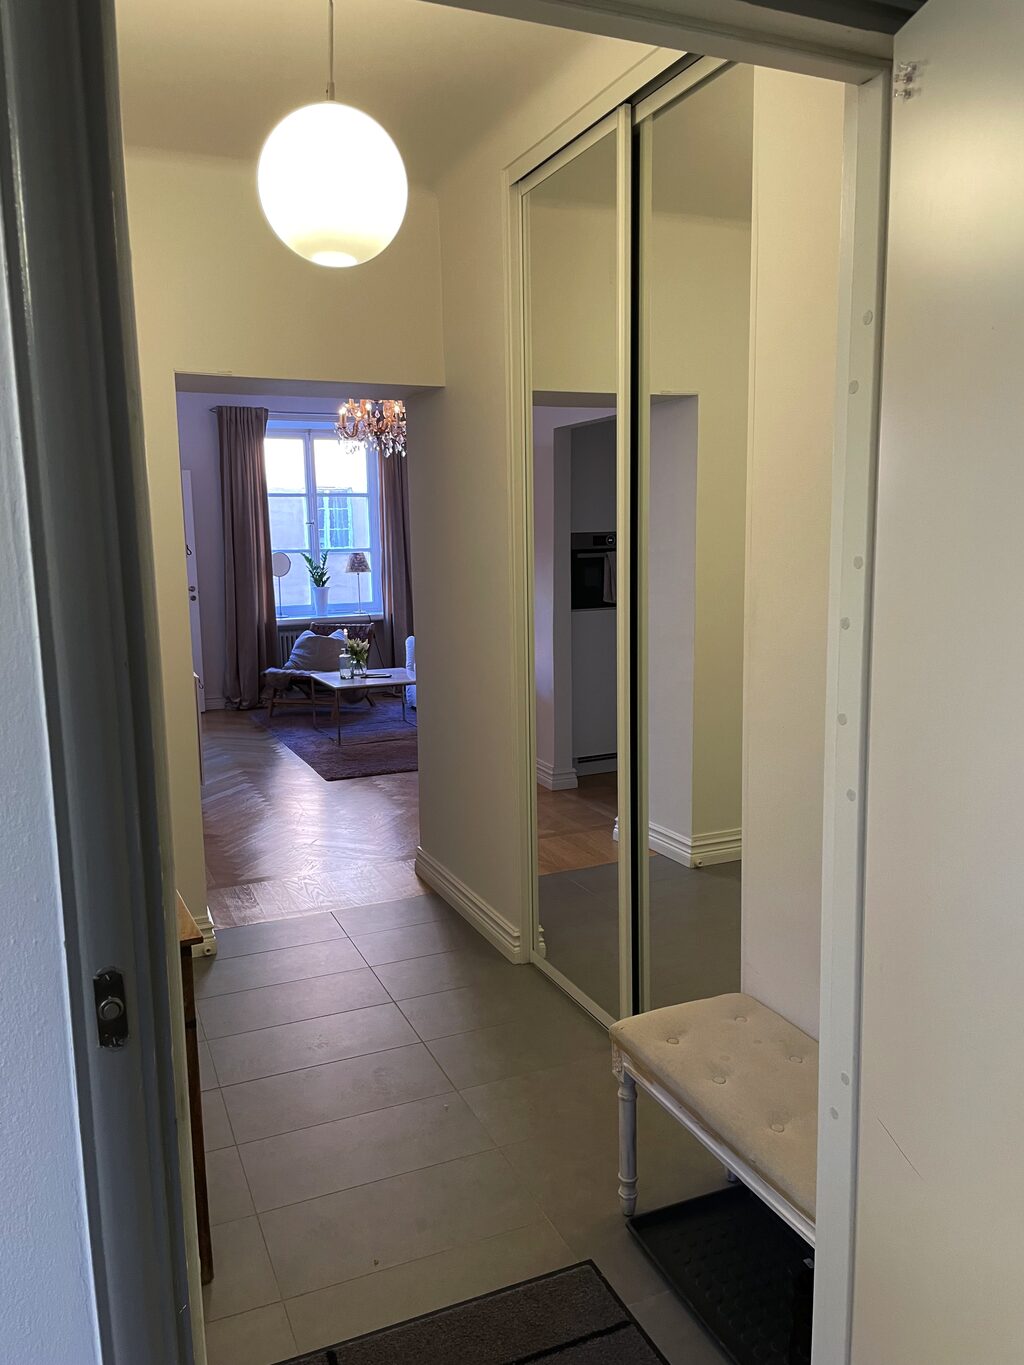 Lägenhetsbyte - Heleneborgsgatan 44, 117 32 Stockholm